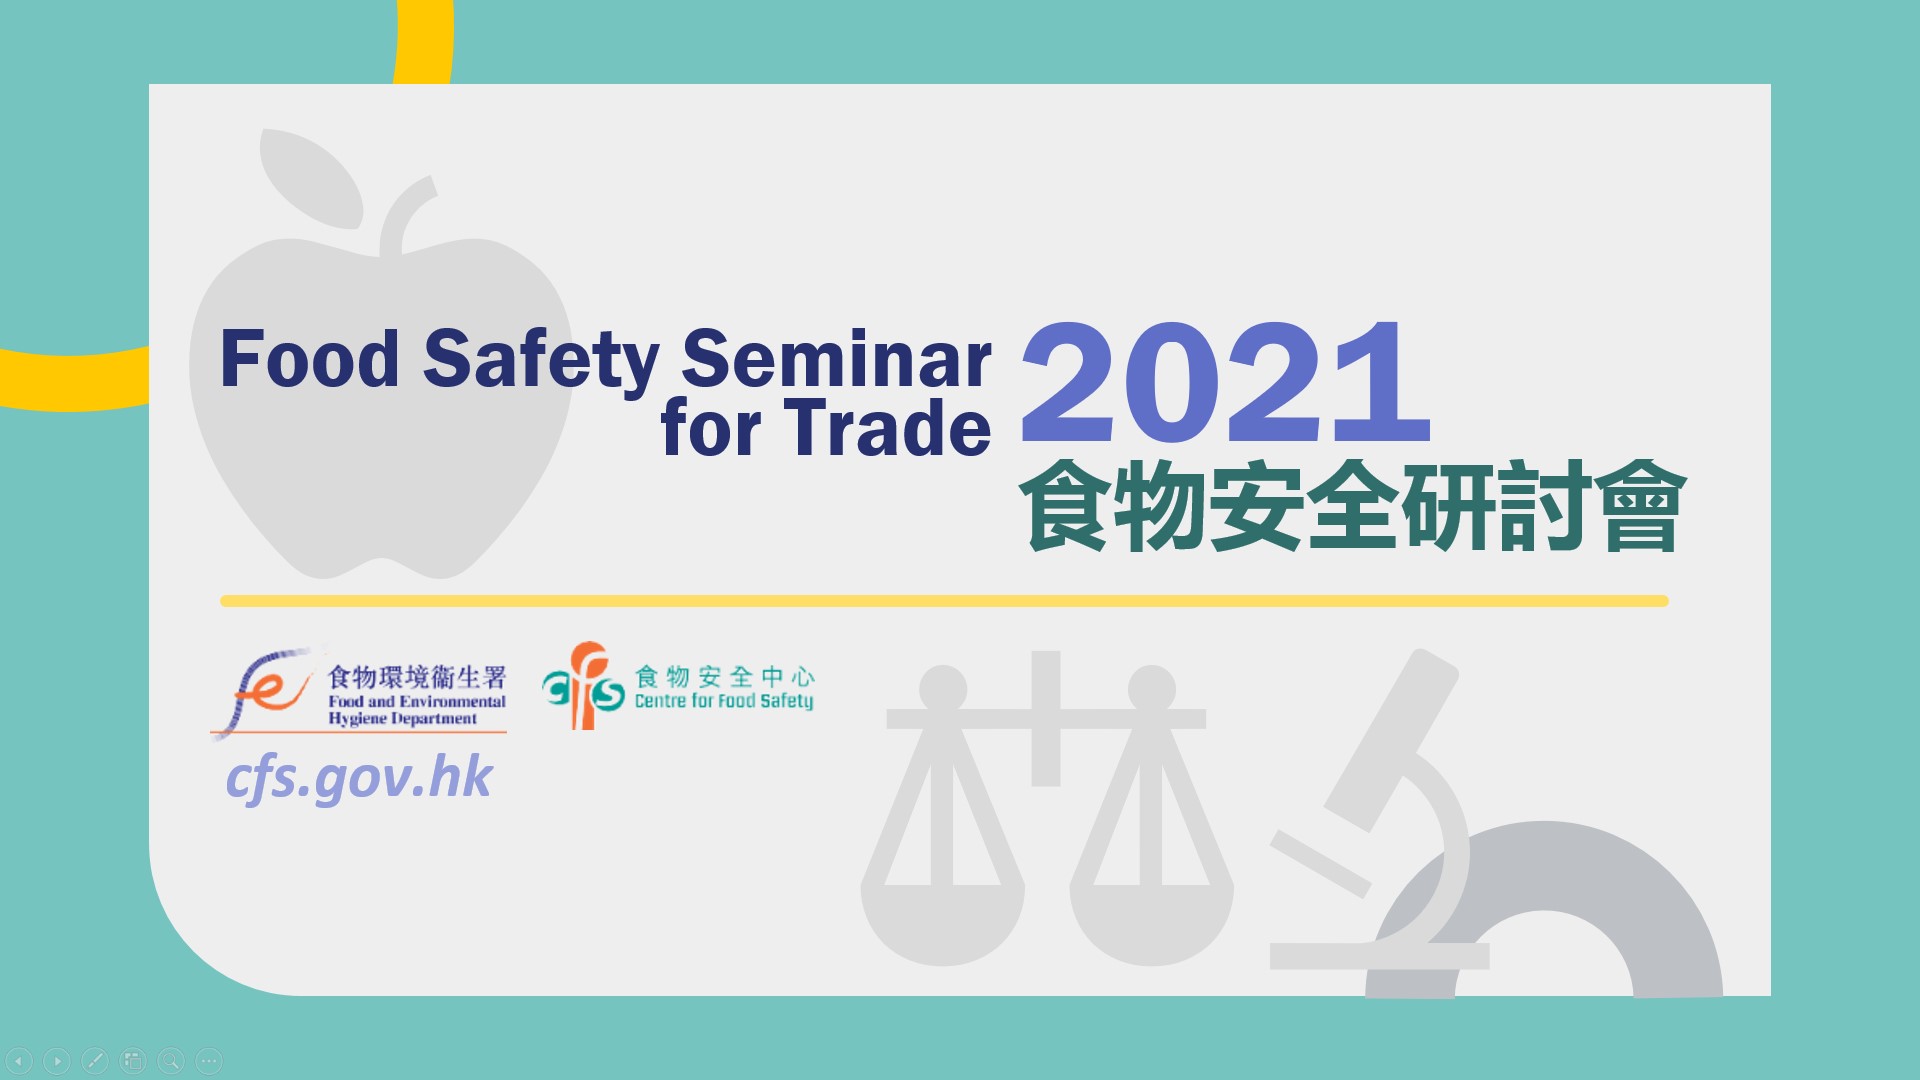 Food Safety Seminar for Trade 2021